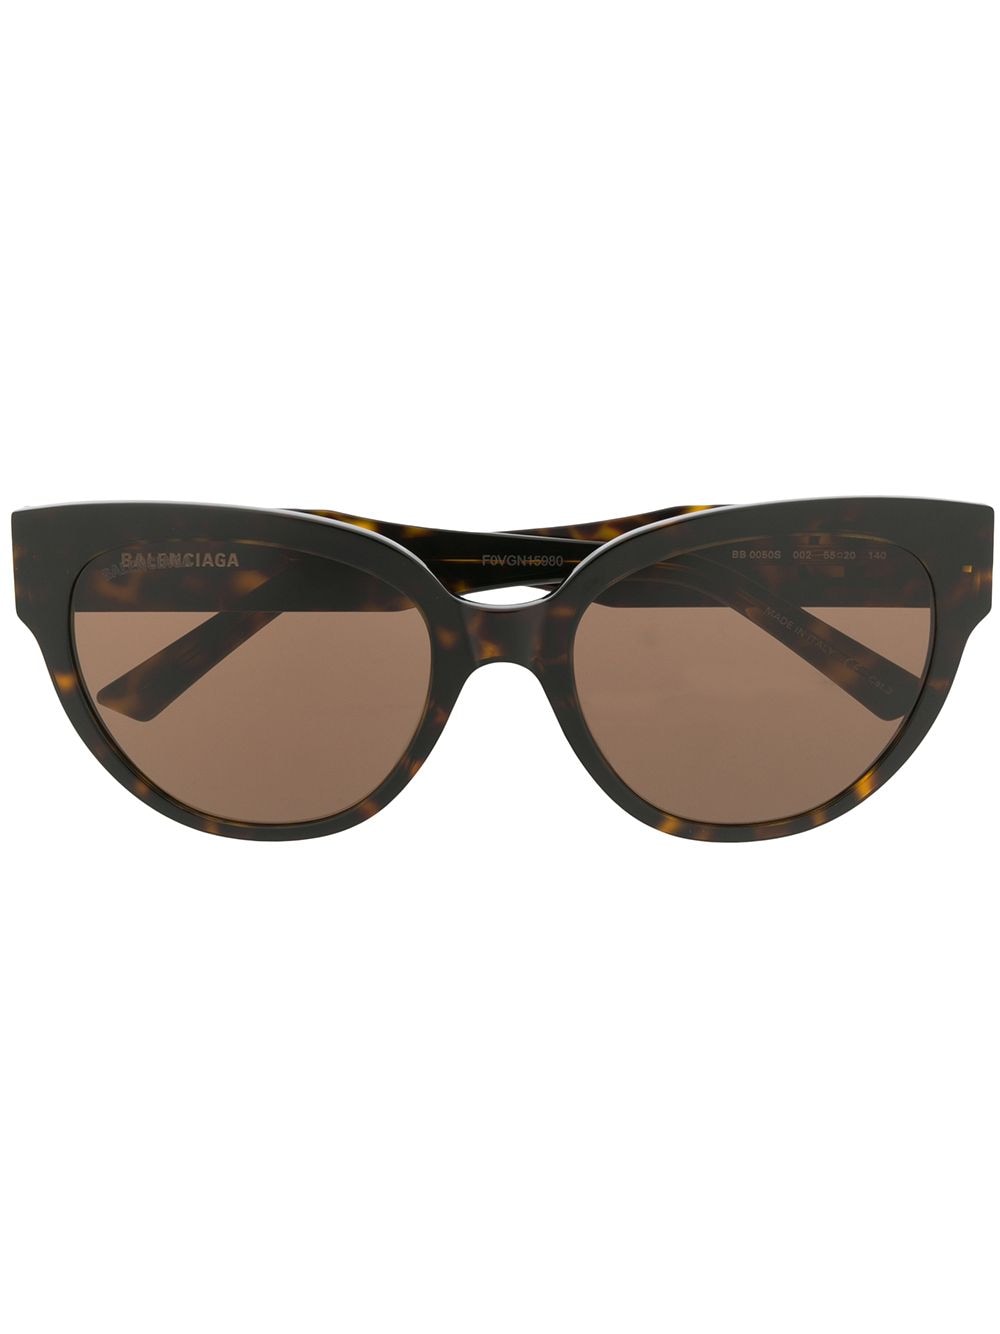 Balenciaga Cat-eye Shaped Sunglasses In Brown